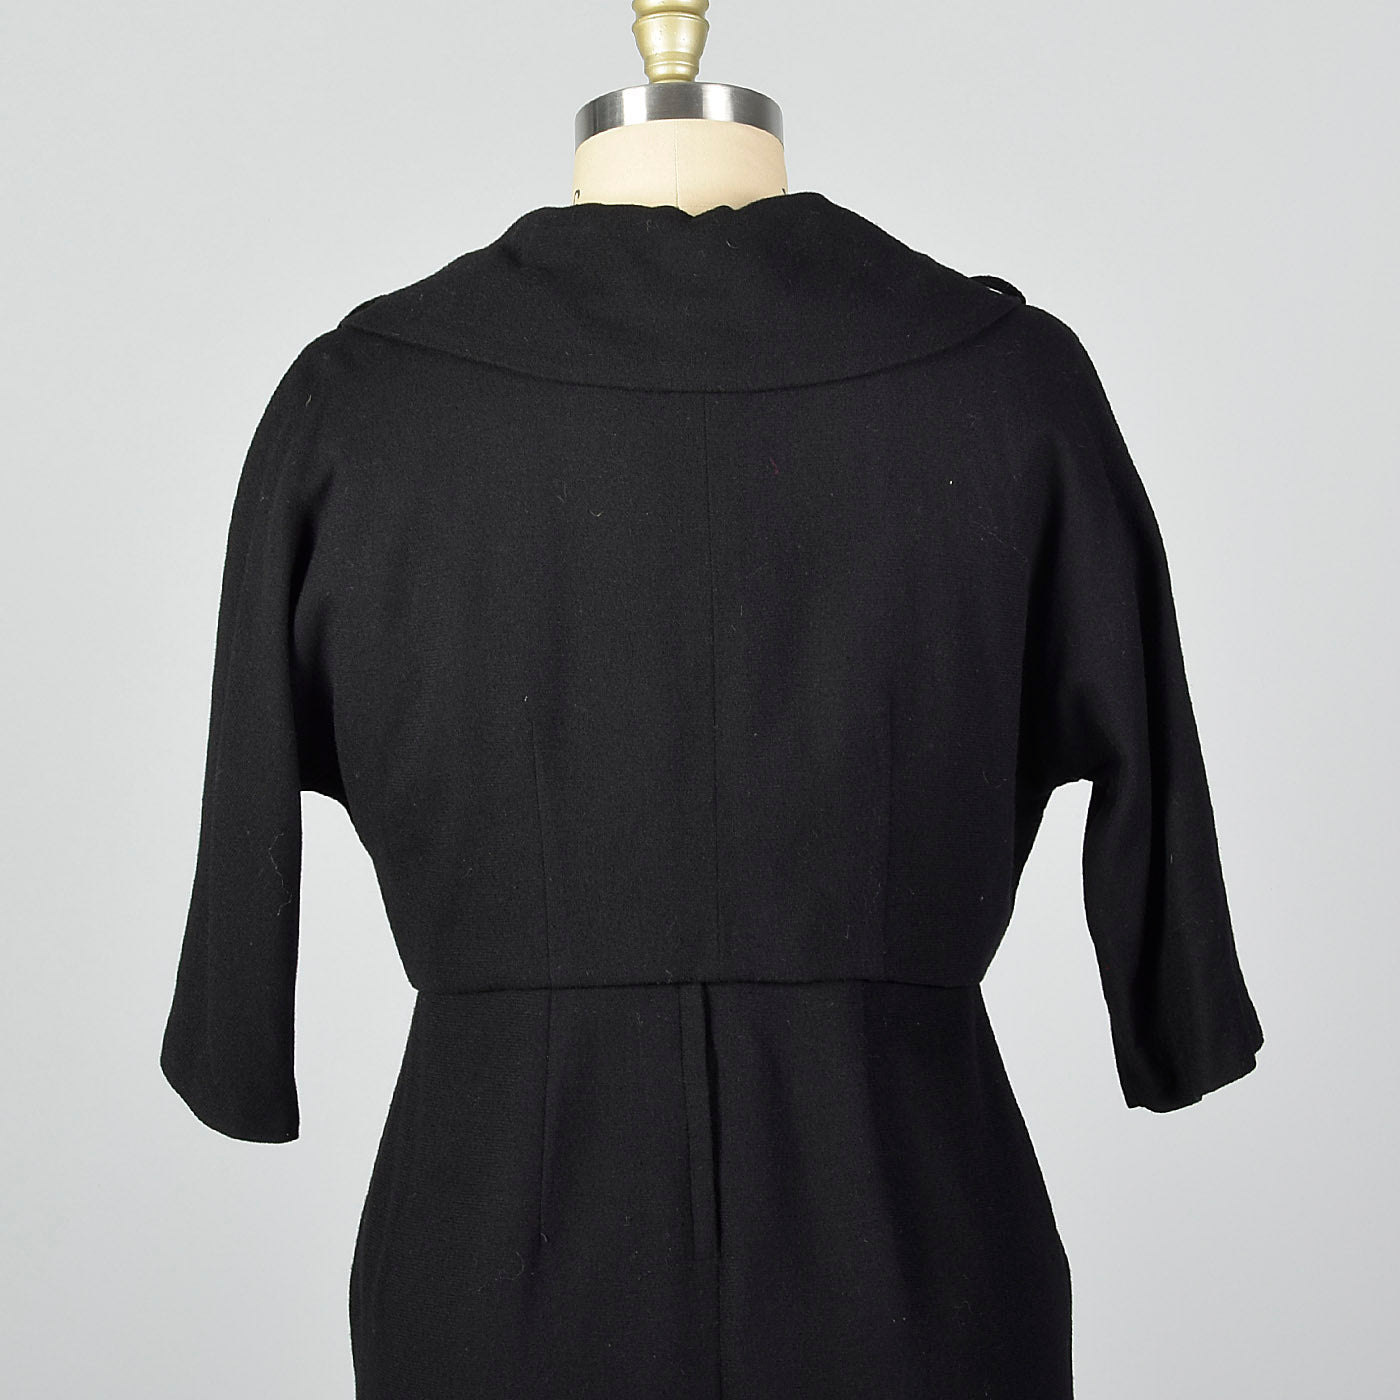 1950s Black Wool Dress and Jacket Set